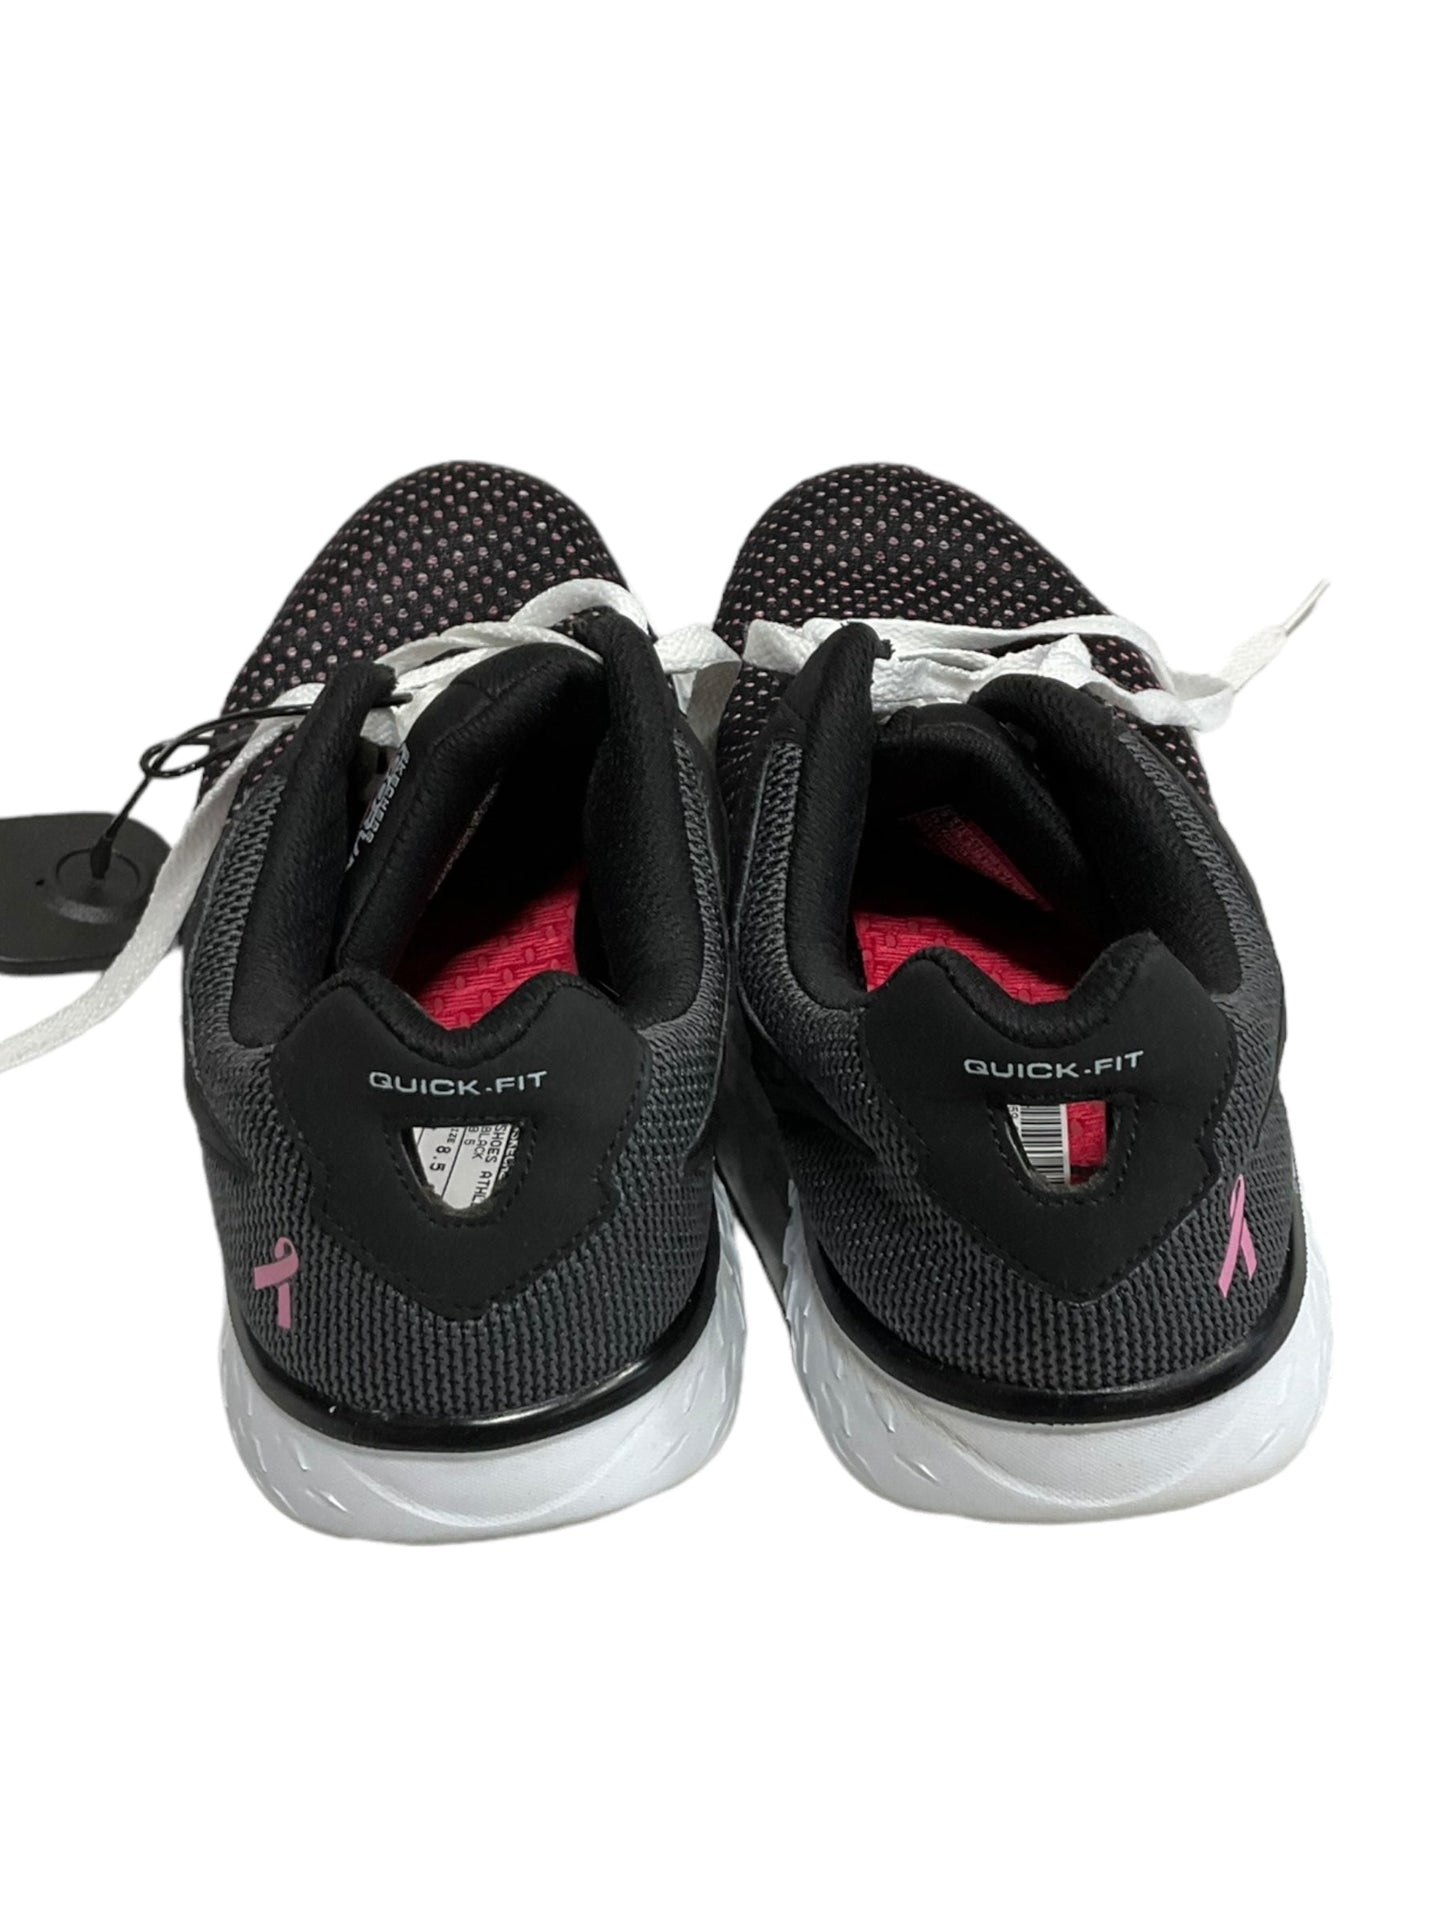 Black Shoes Athletic Skechers, Size 8.5